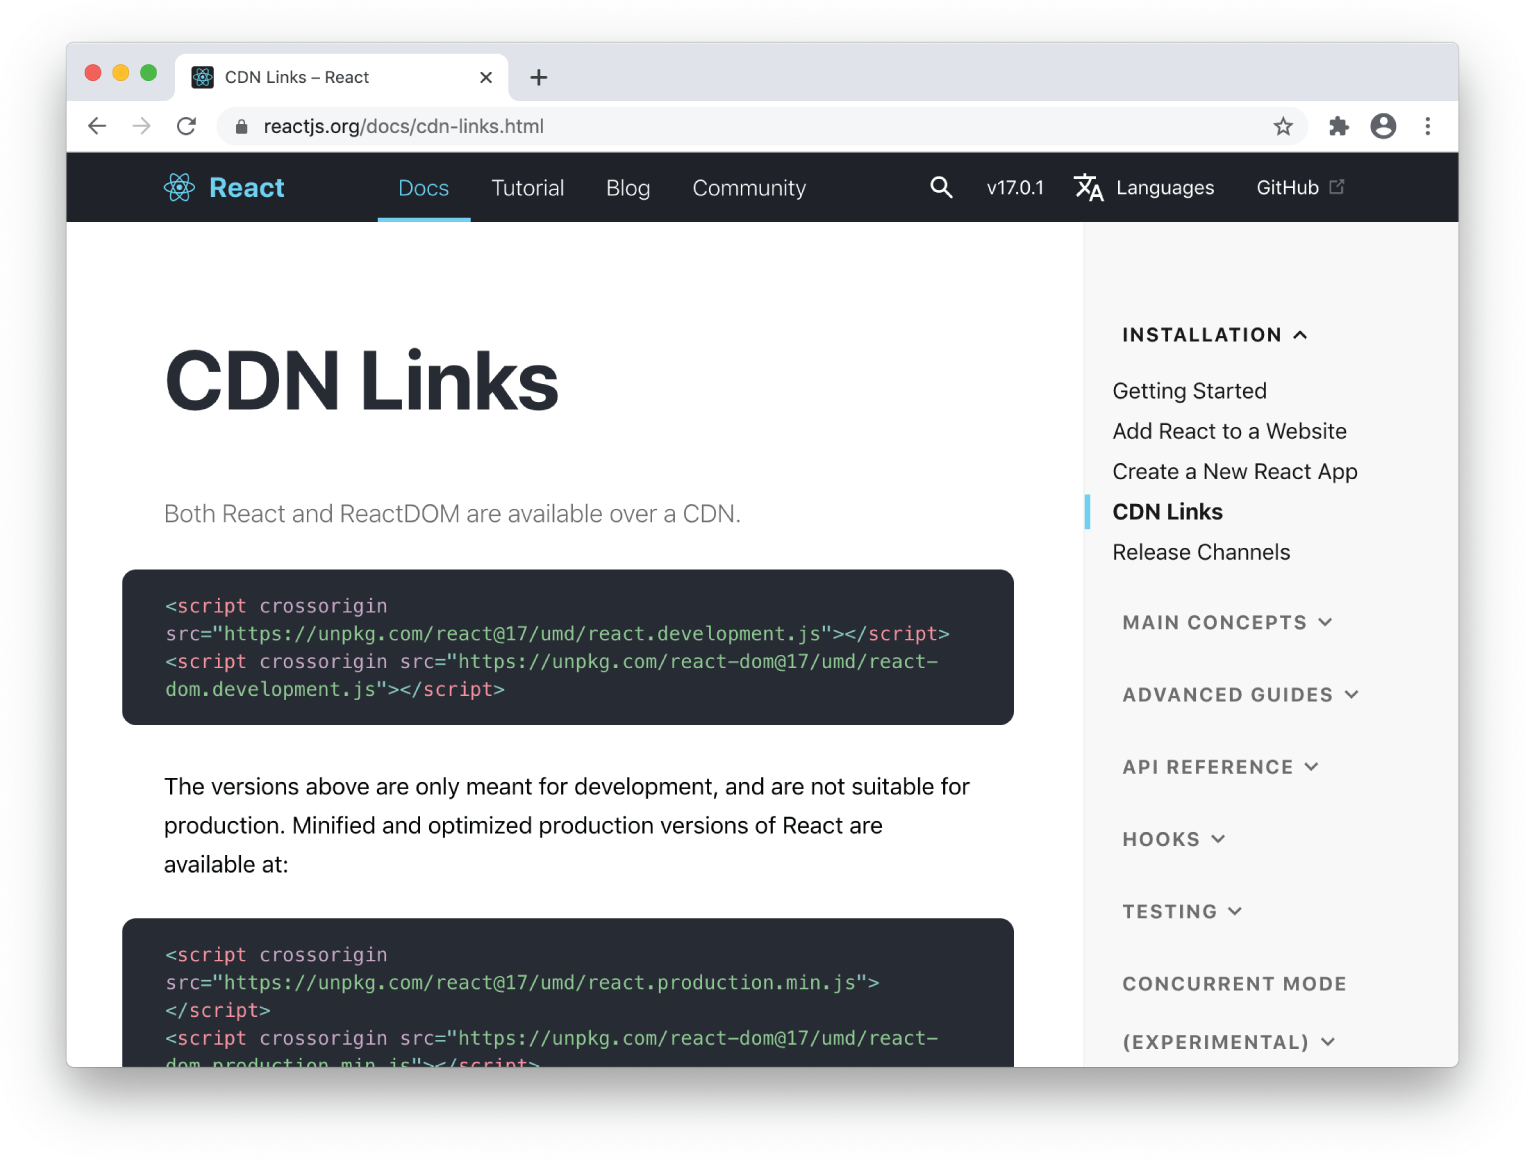 Snapshot shows the React CDN Links